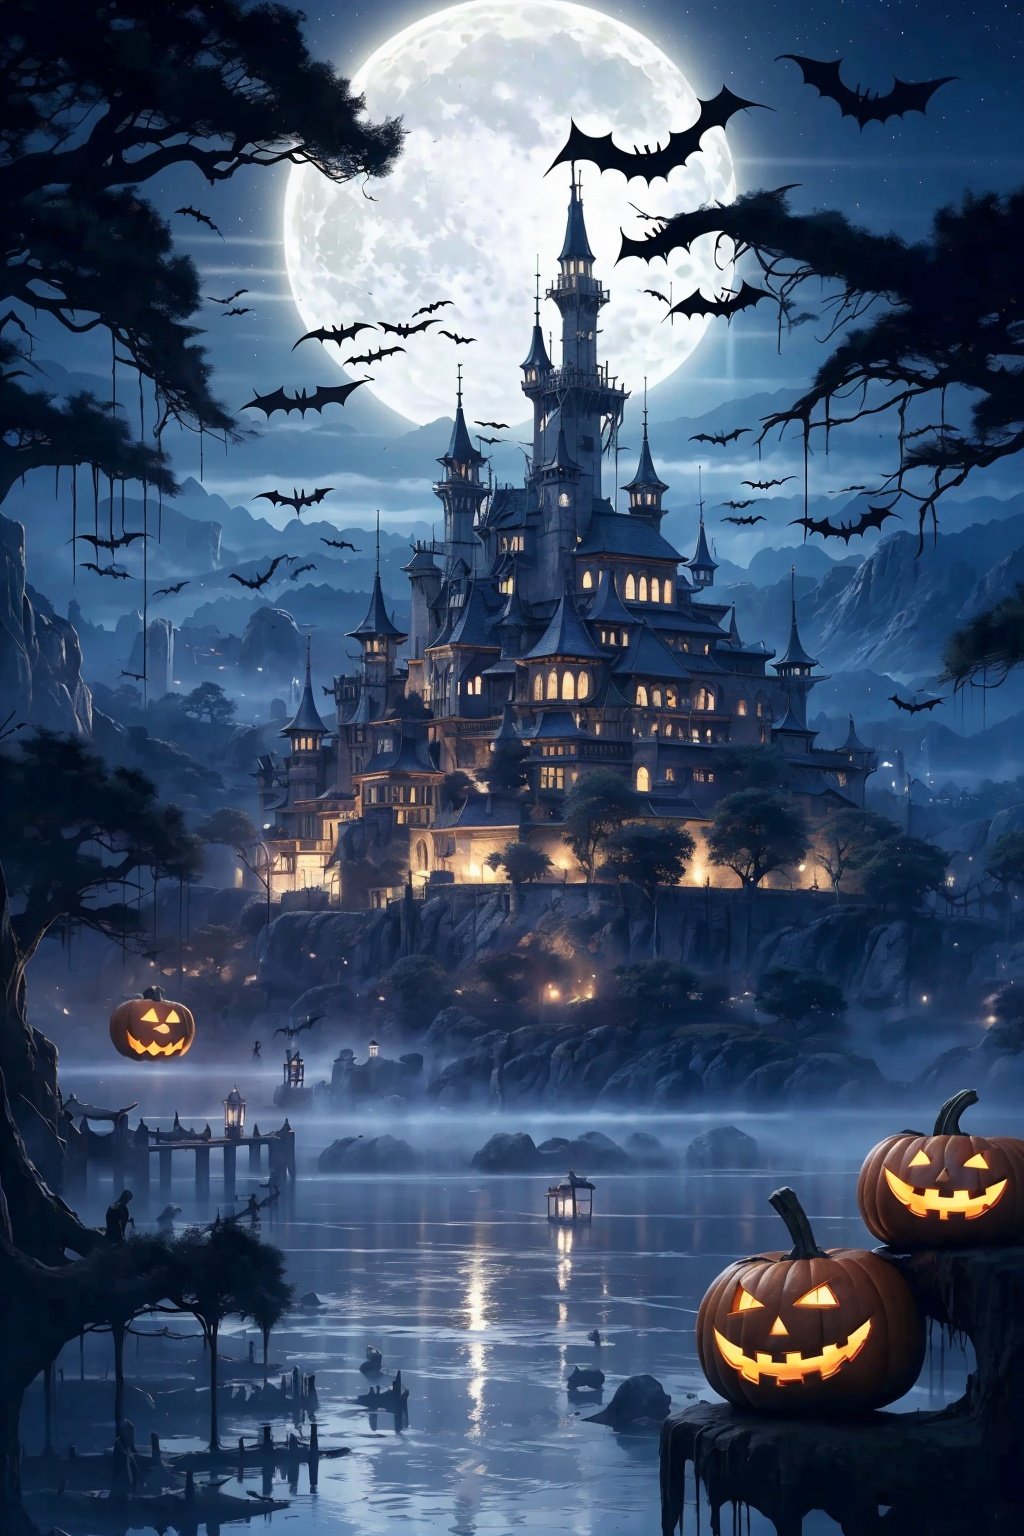  Best quality,8k,cg,bat,Floating Spirit,castle,Halloween